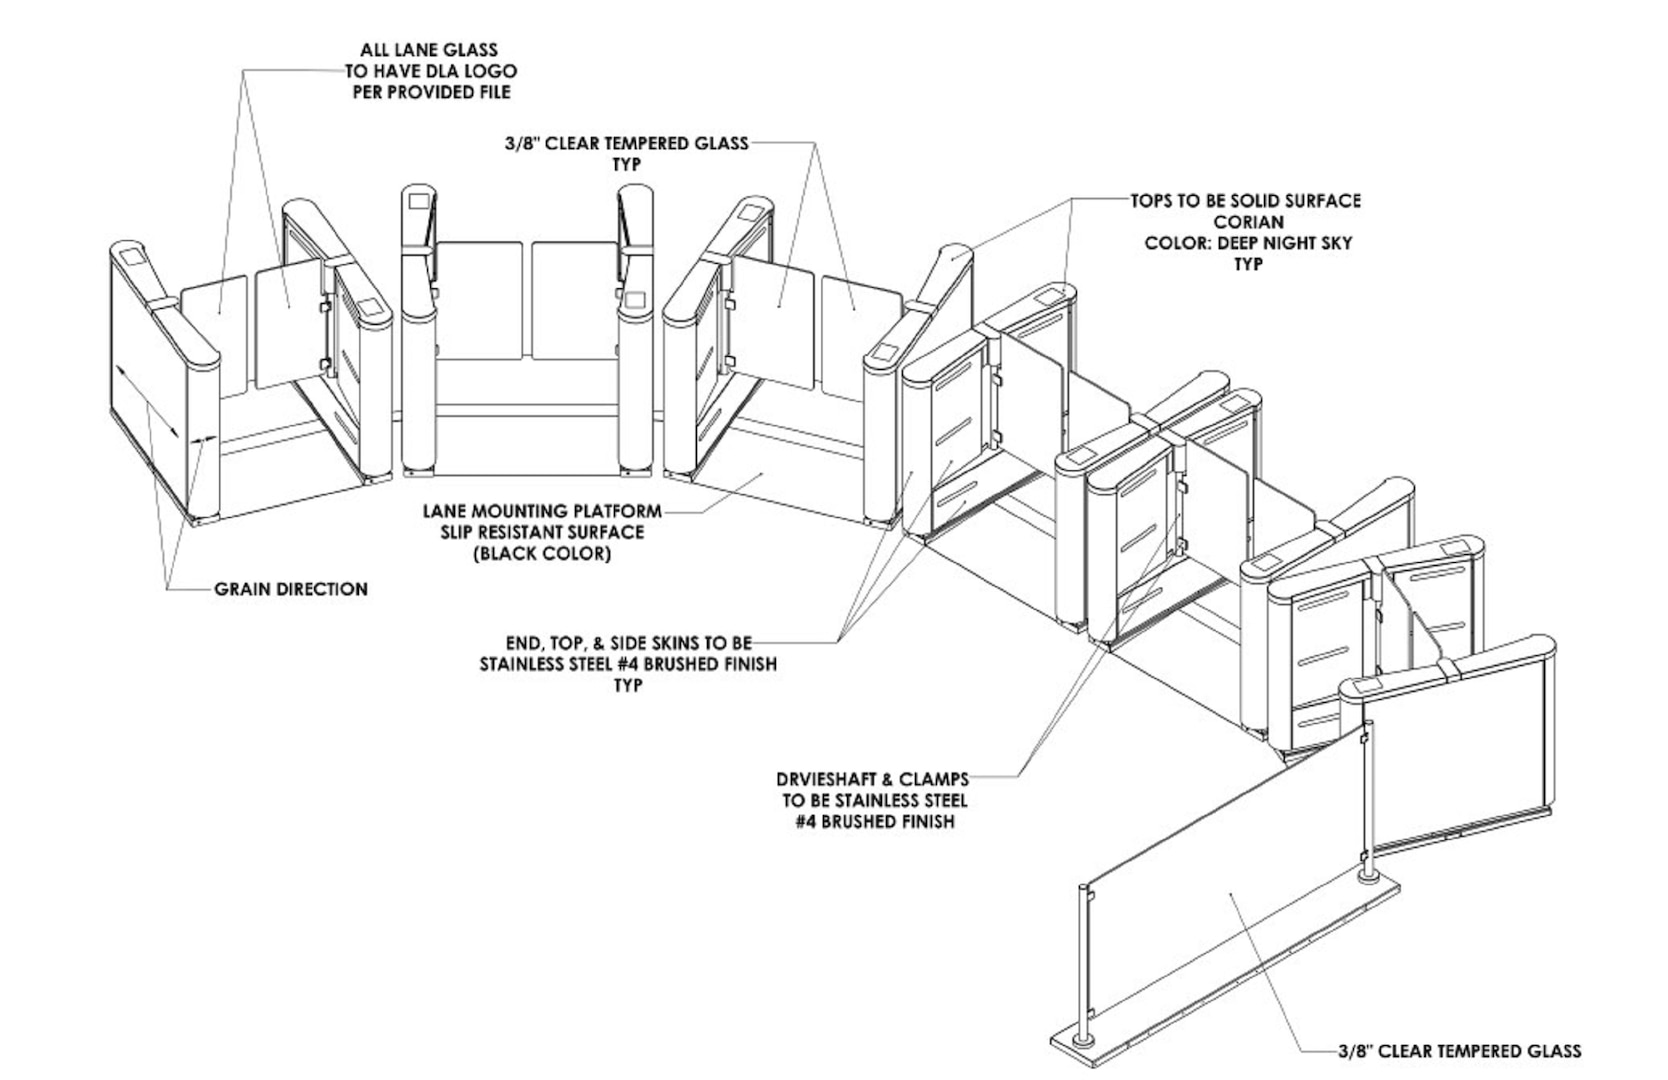 Graphic shows 6 turnstiles